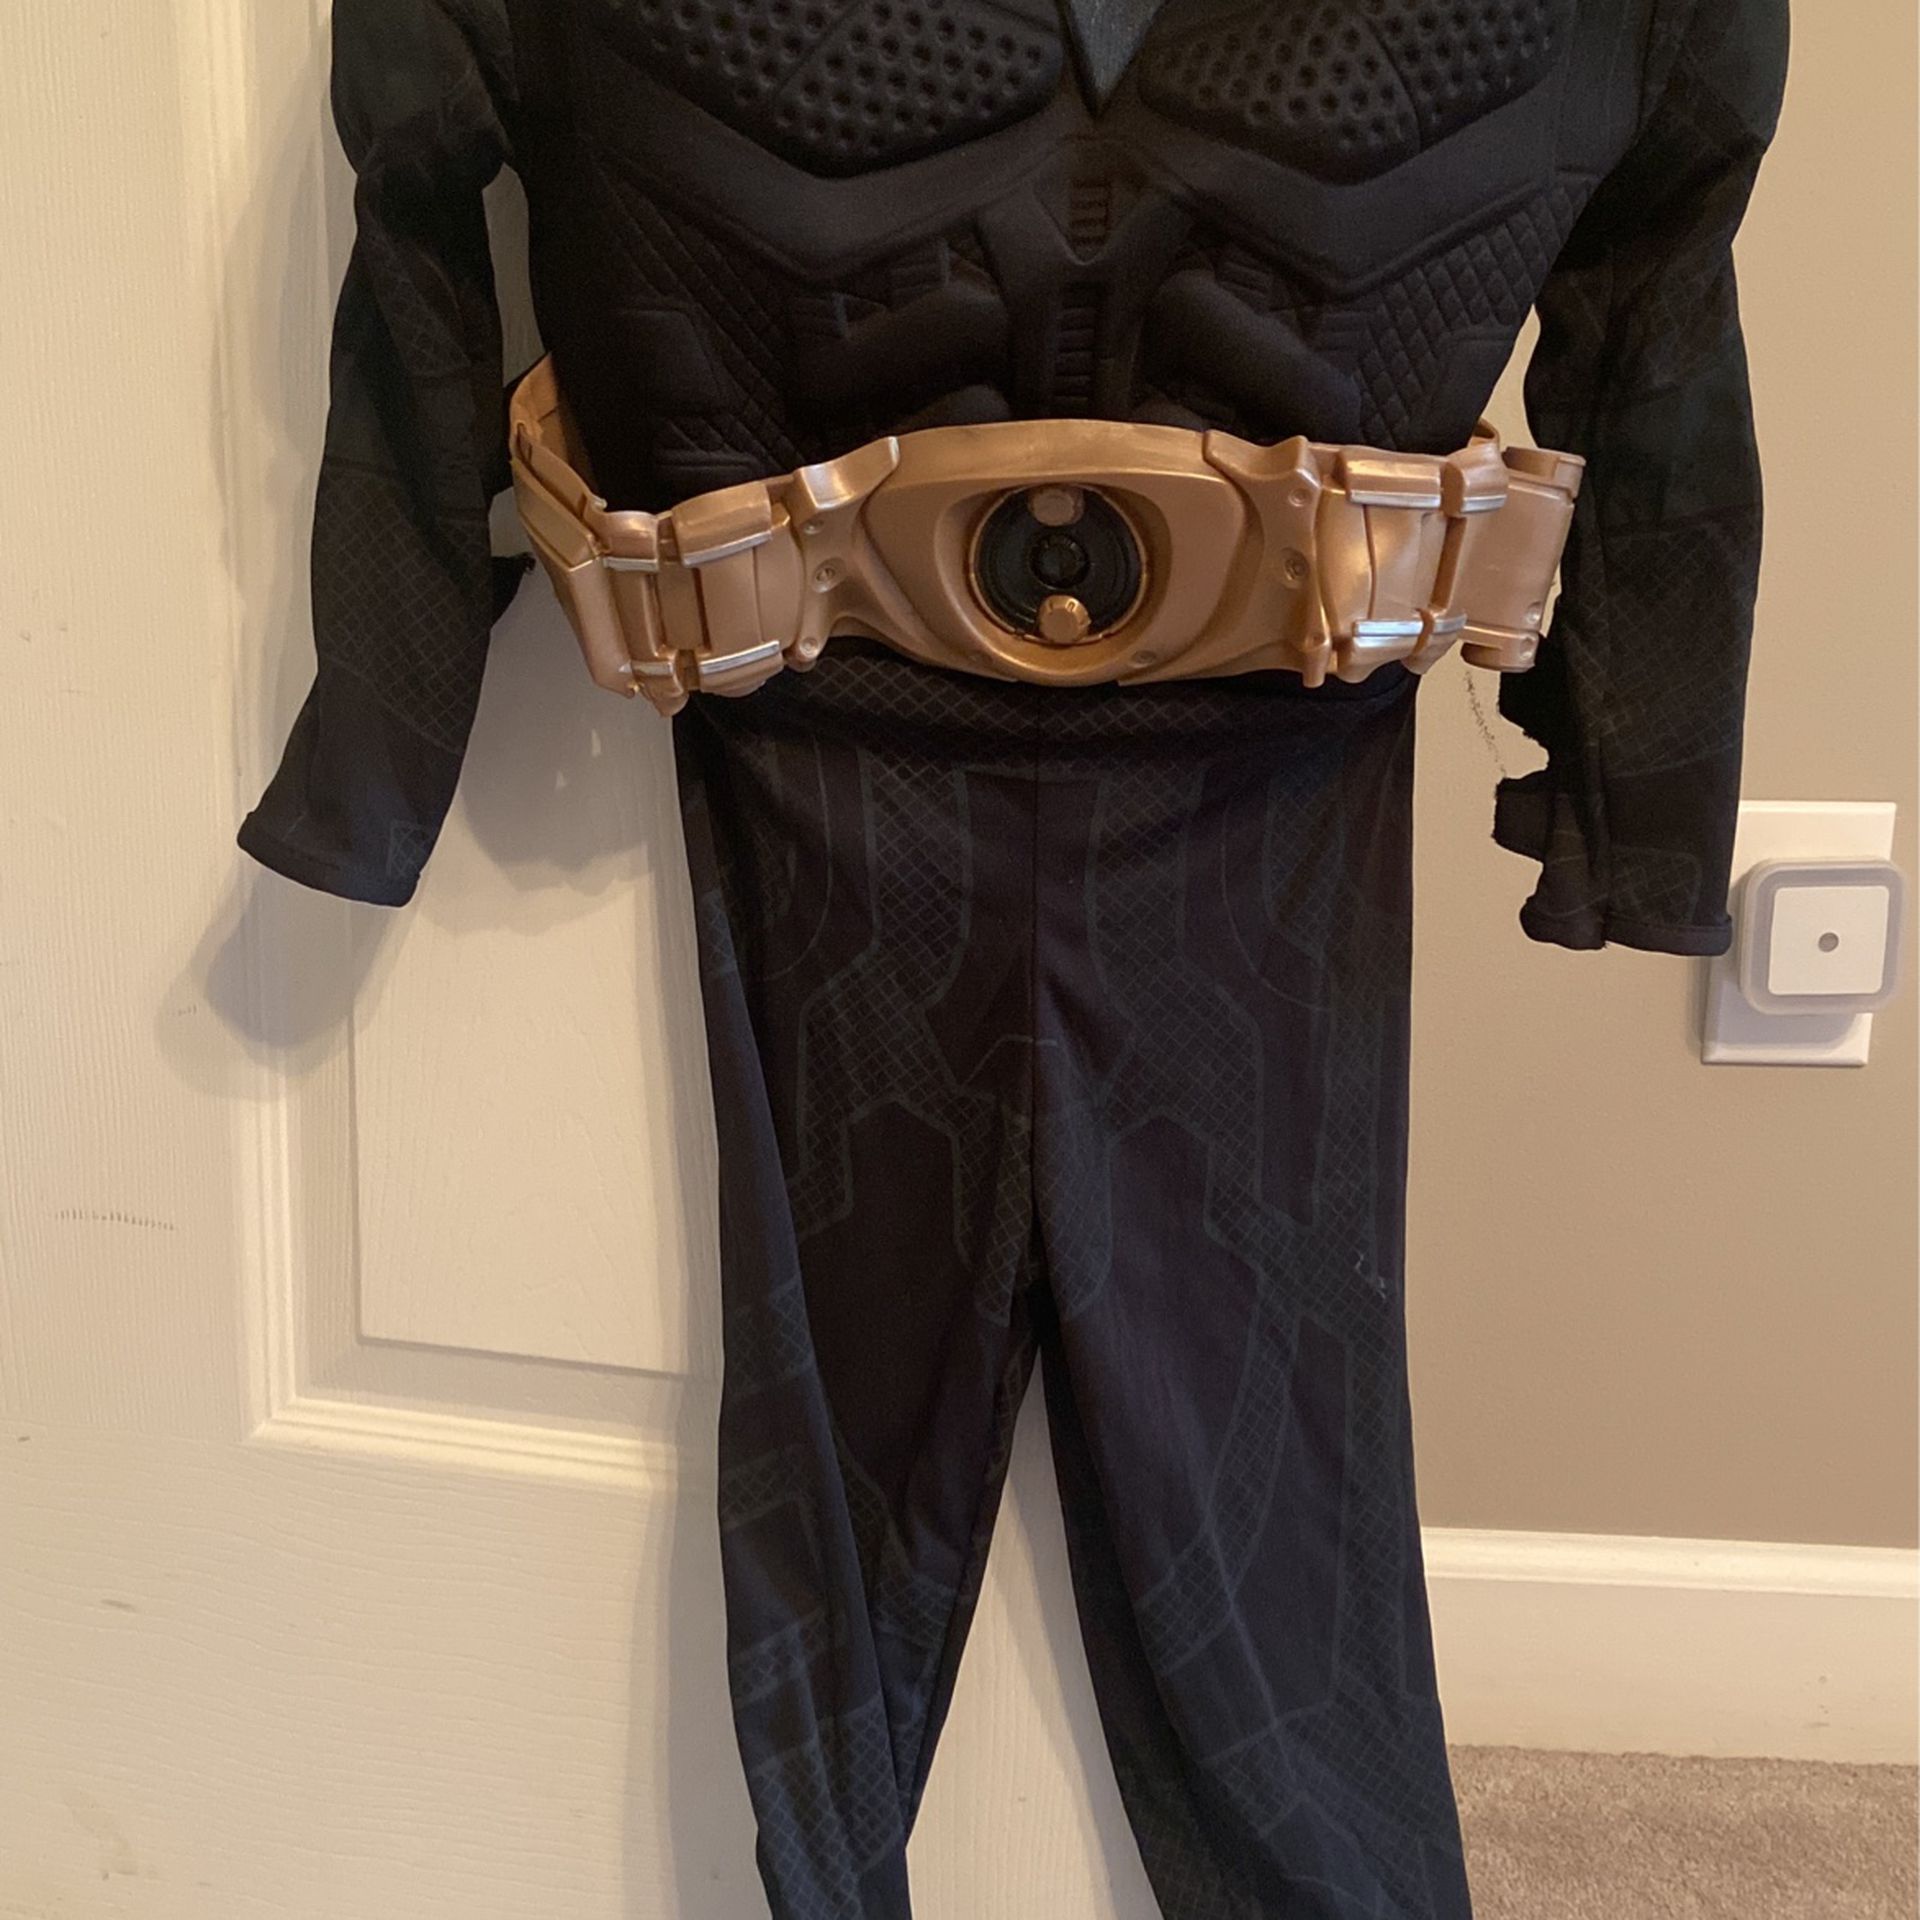 Batman Costume Toddler 